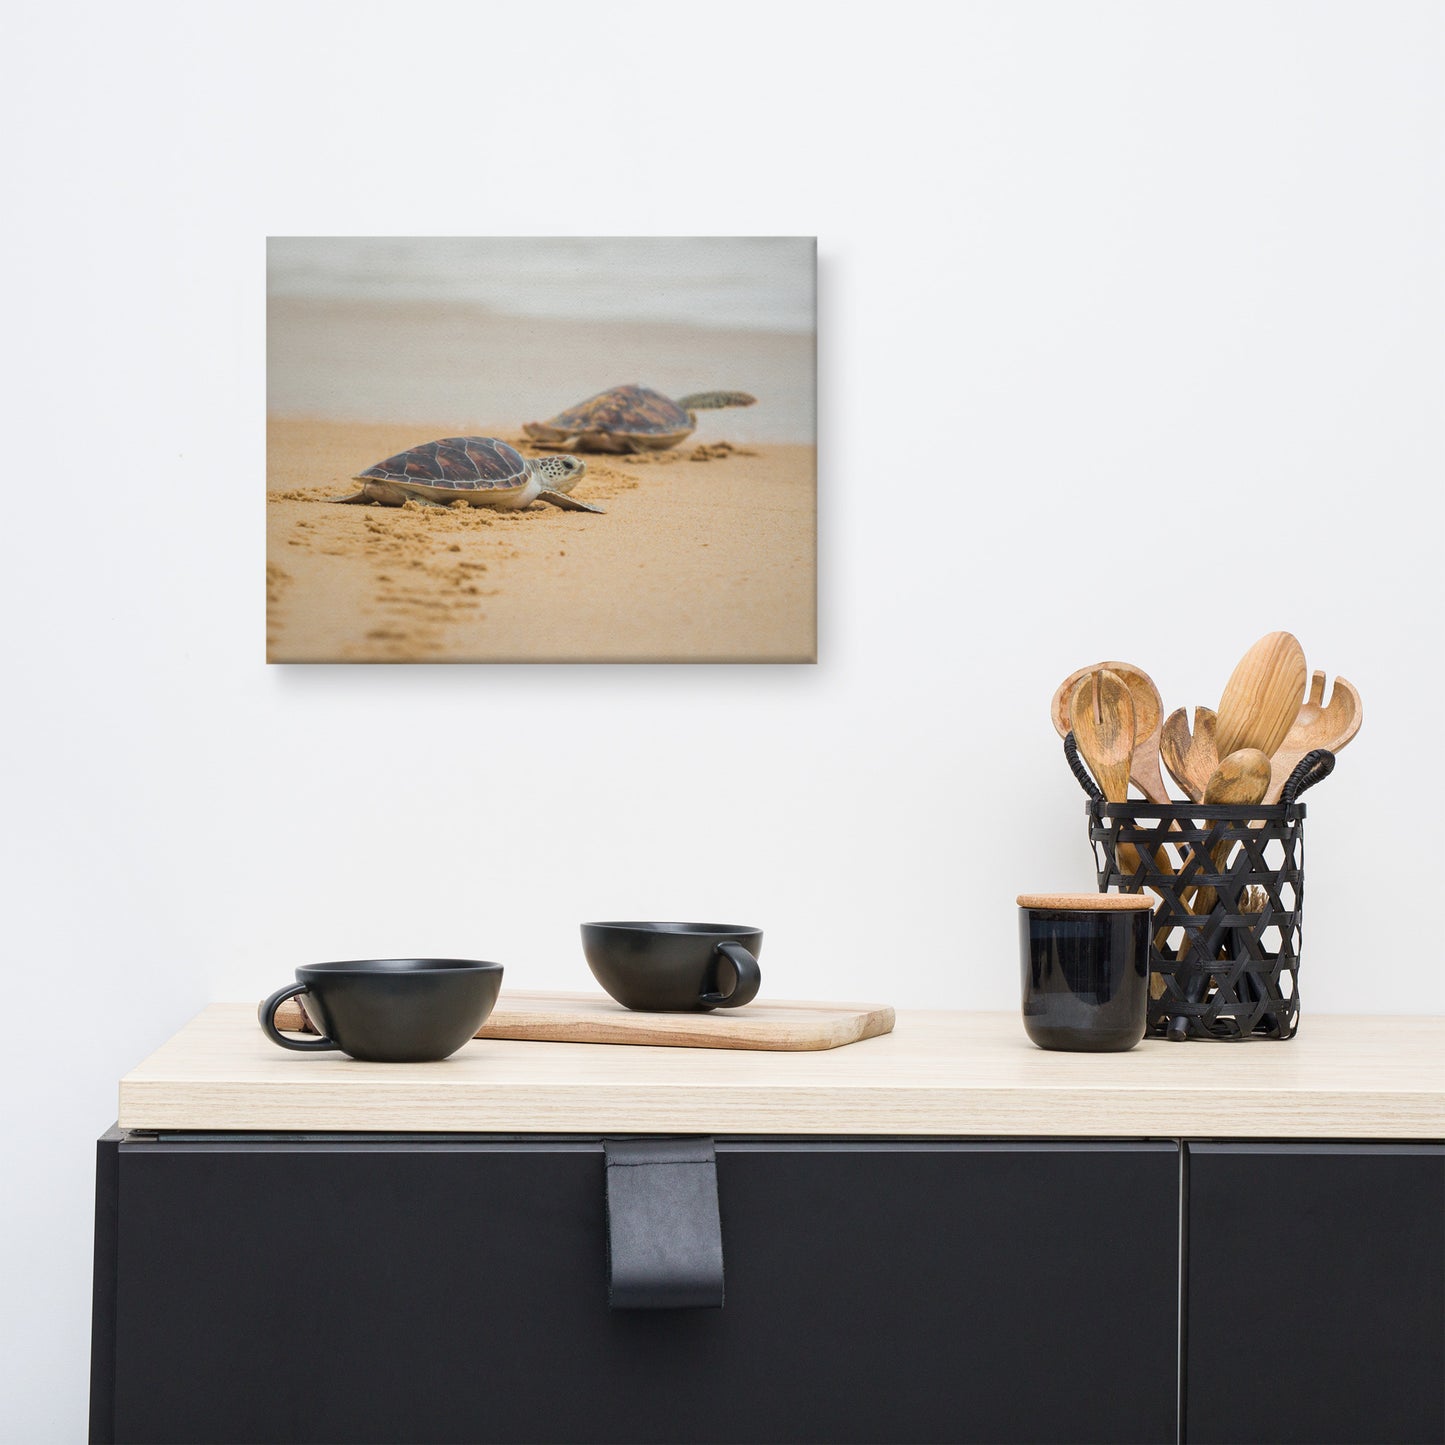 Modern Art Dining Room: Hawksbill Sea Turtle Hatchlings at the Shore - Coastal / Wildlife / Marine Animal / Nature Photograph Canvas Wall Art Print - Artwork